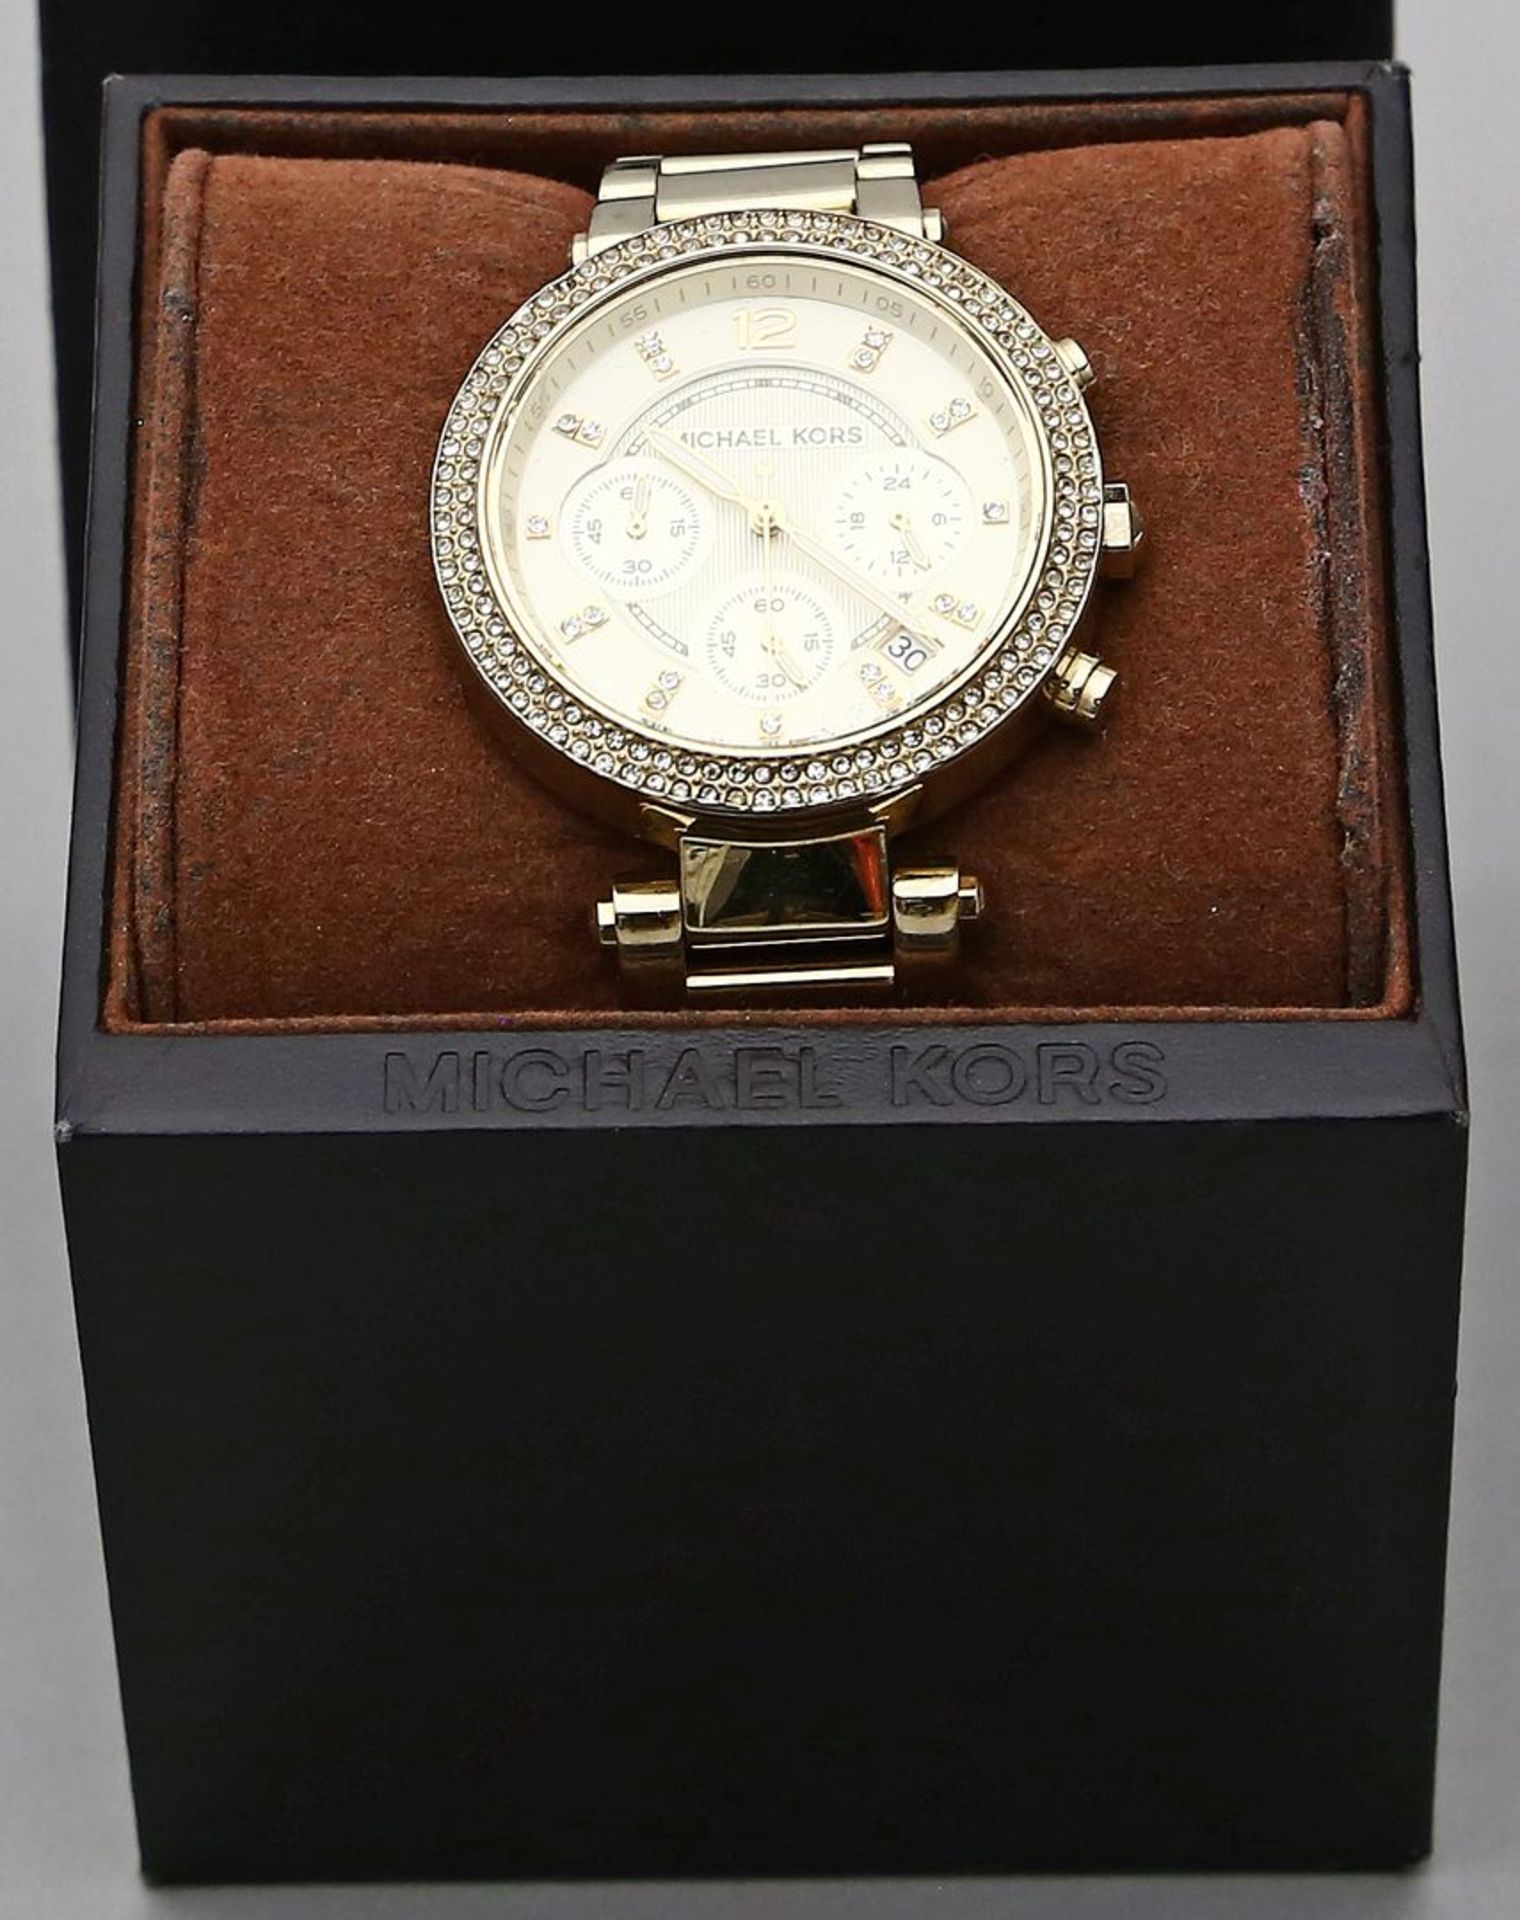 Herren-Armbandchronograph "Michael Kors".